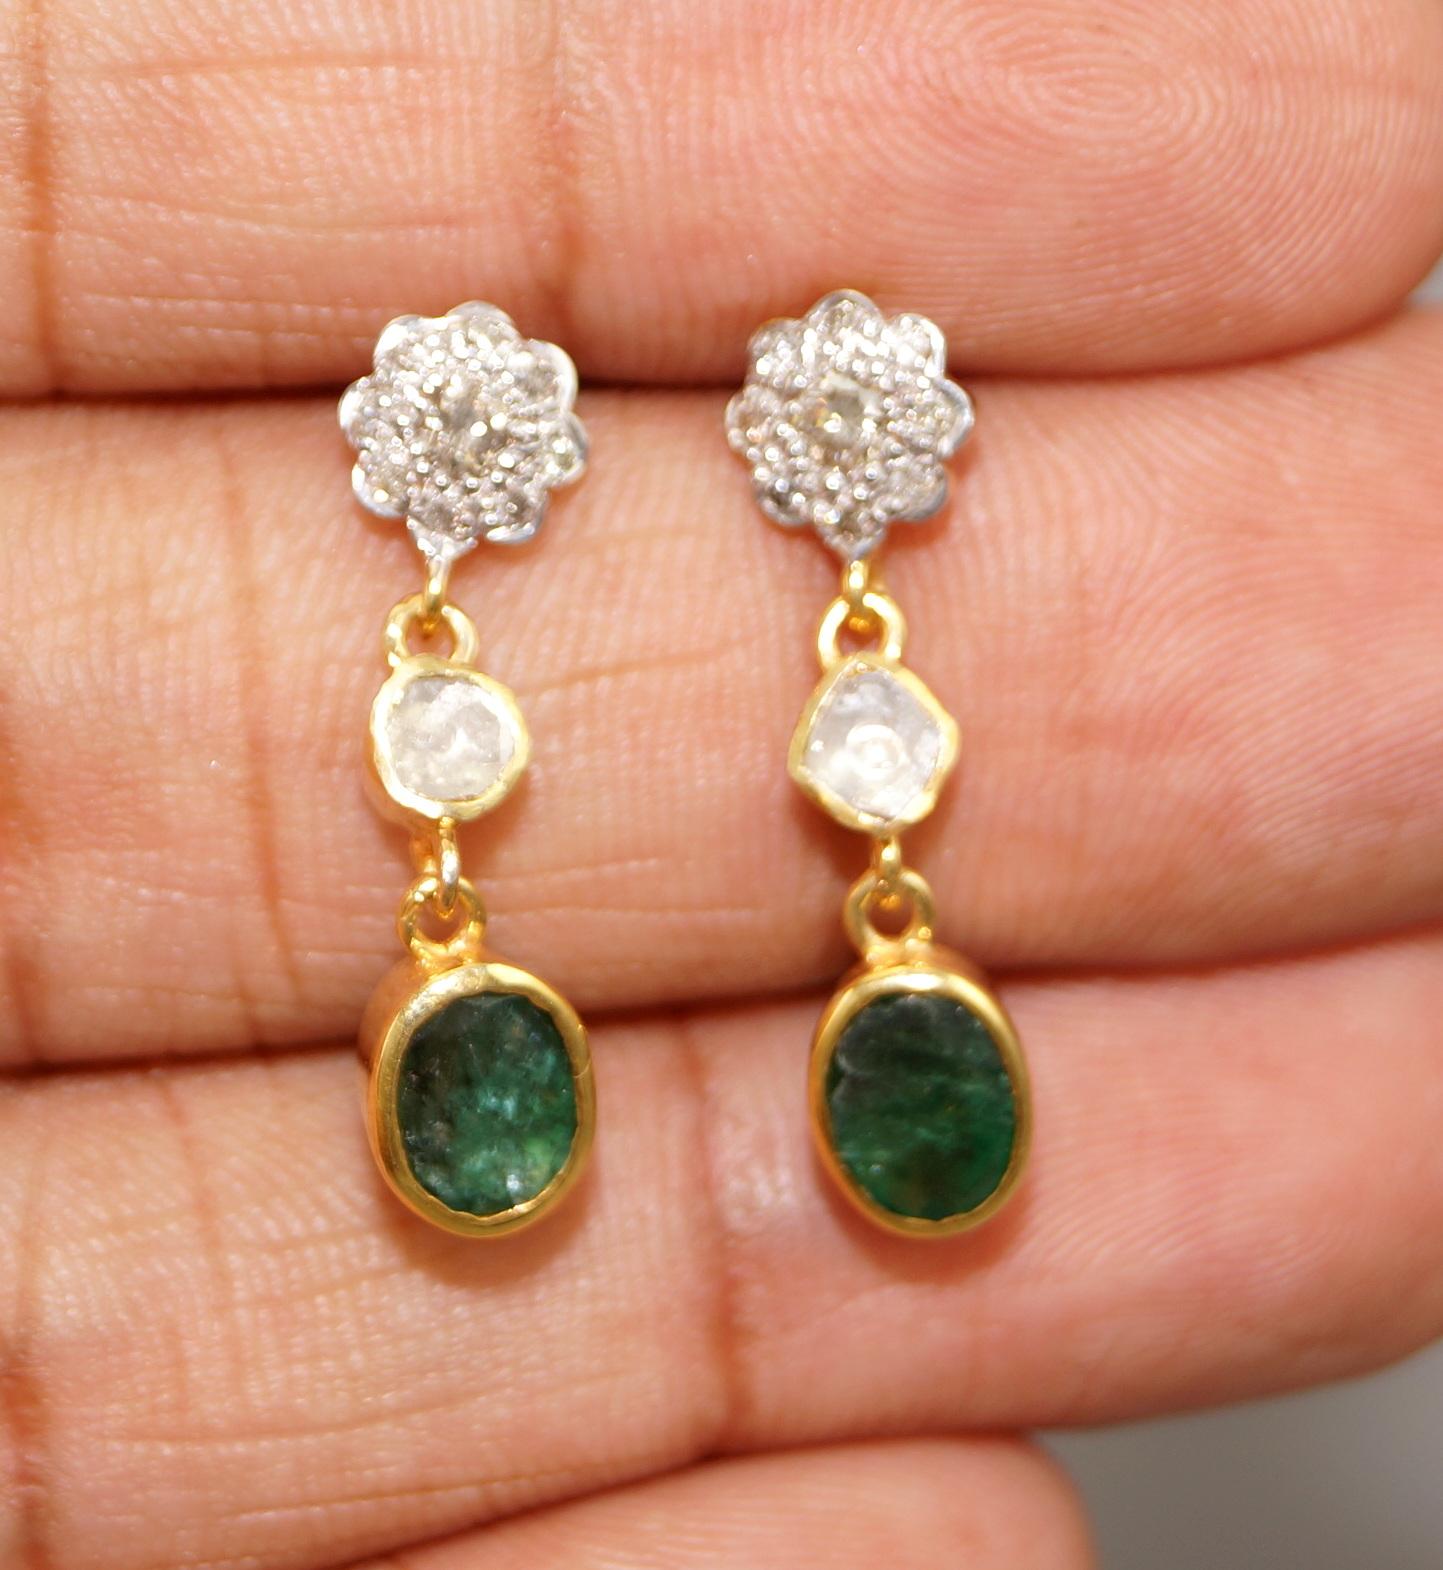 Handmade natural uncut rose cut diamonds emeralds 925 silver earrings For Sale 1